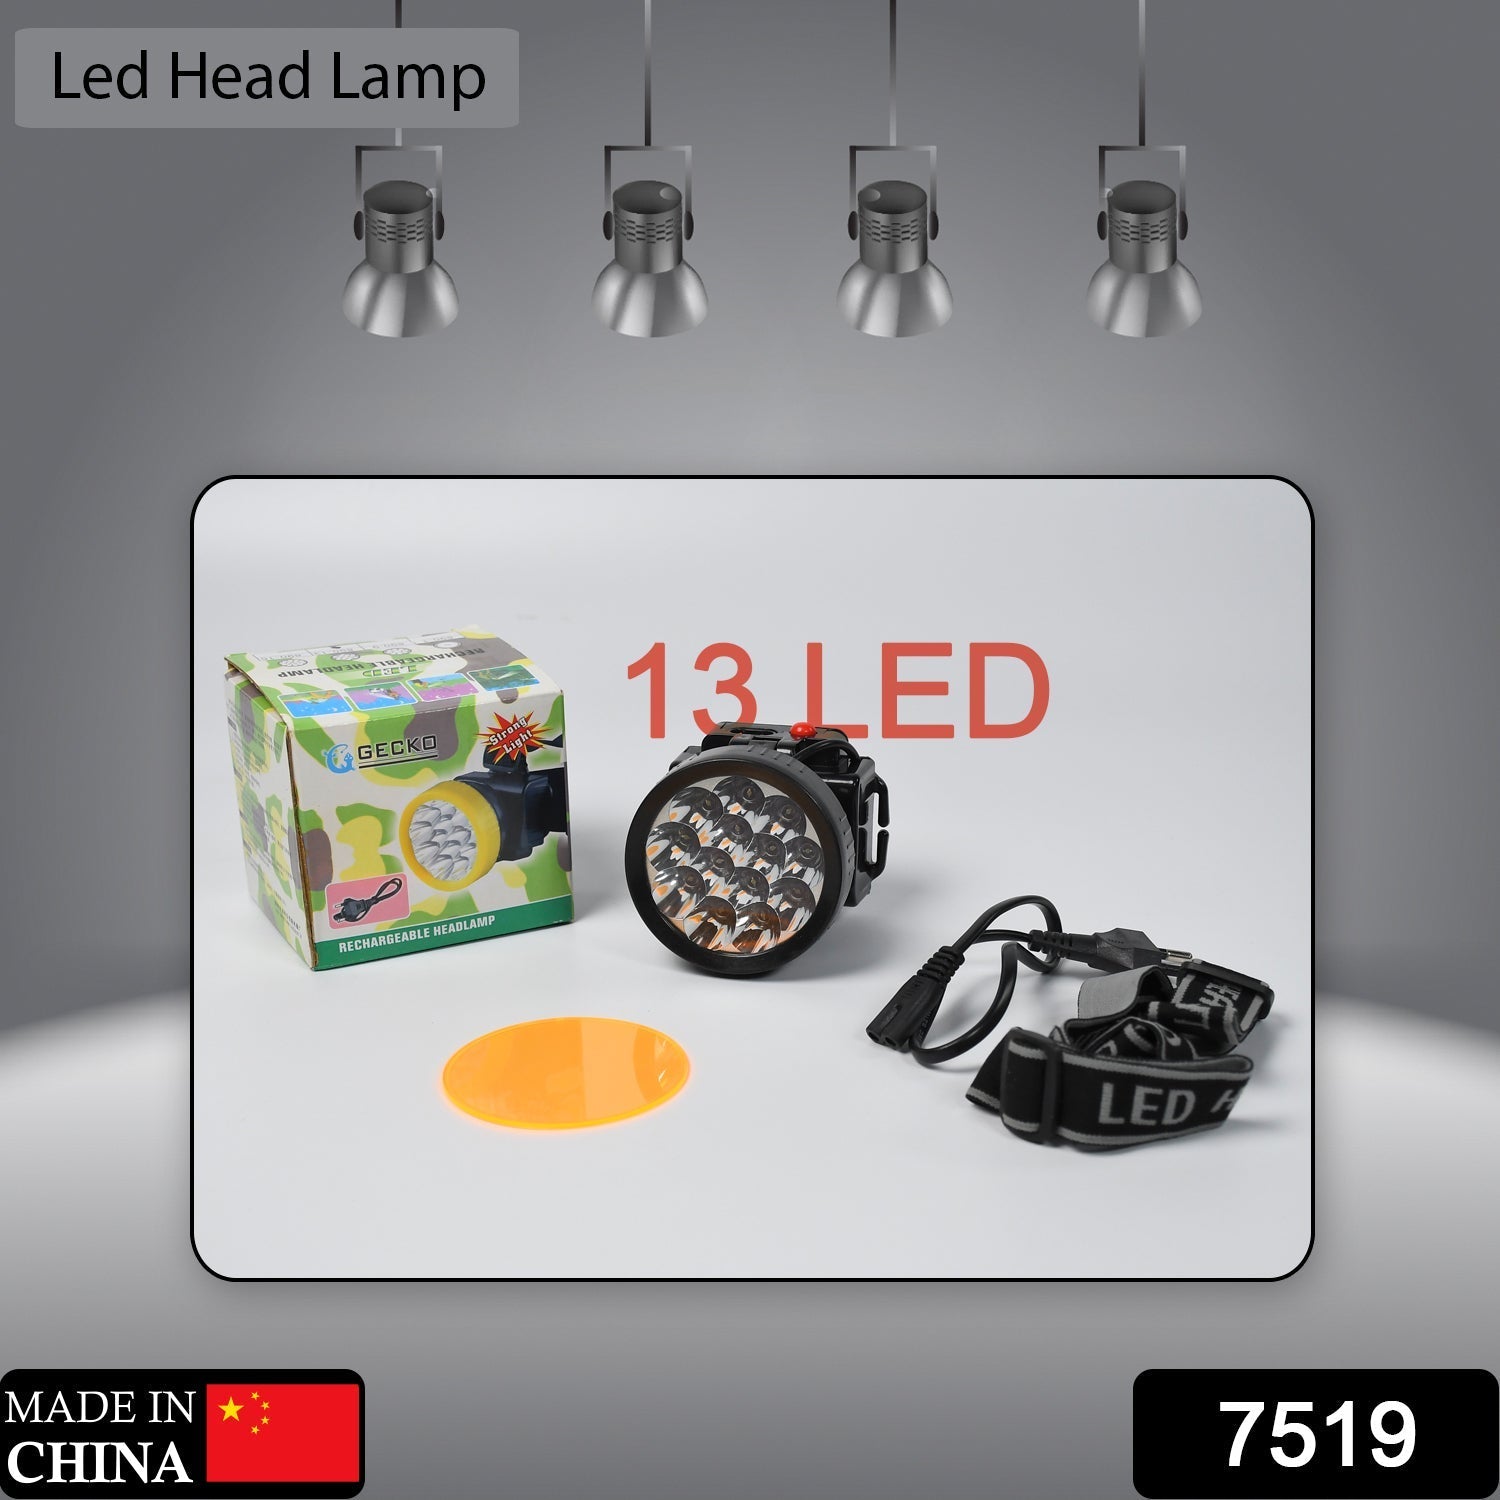 7519 HEAD LAMP 13 LED LONG RANGE RECHARGEABLE HEADLAMP ADJUSTMENT LAMP USE FOR FARMERS, FISHING, CAMPING, HIKING, TREKKING, CYCLING DeoDap